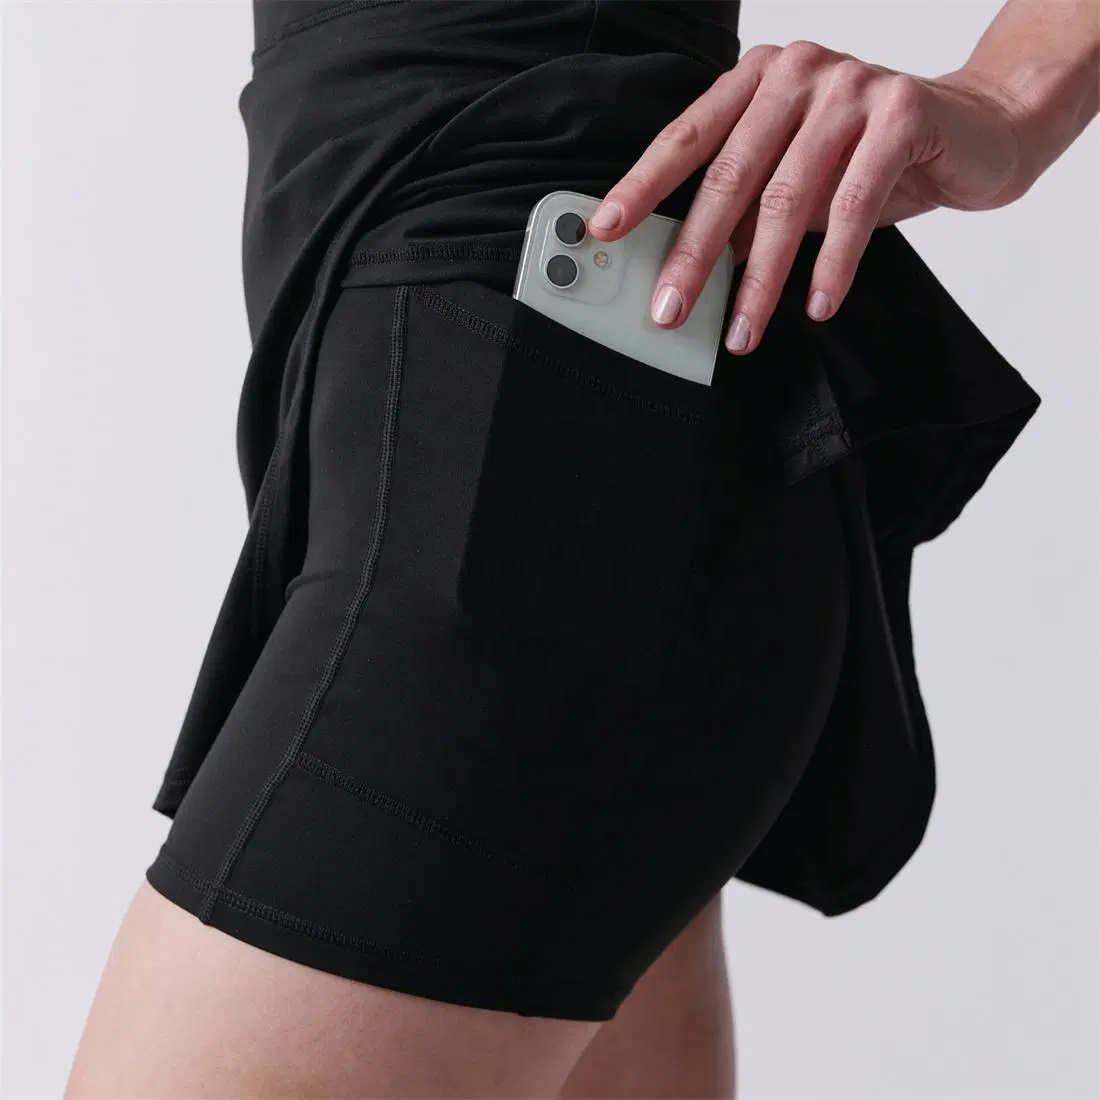 Women Athletic Tennis Sportswear Sleeveless Skirt Golf Apparel Sportswear Dress with Shorts Pockets